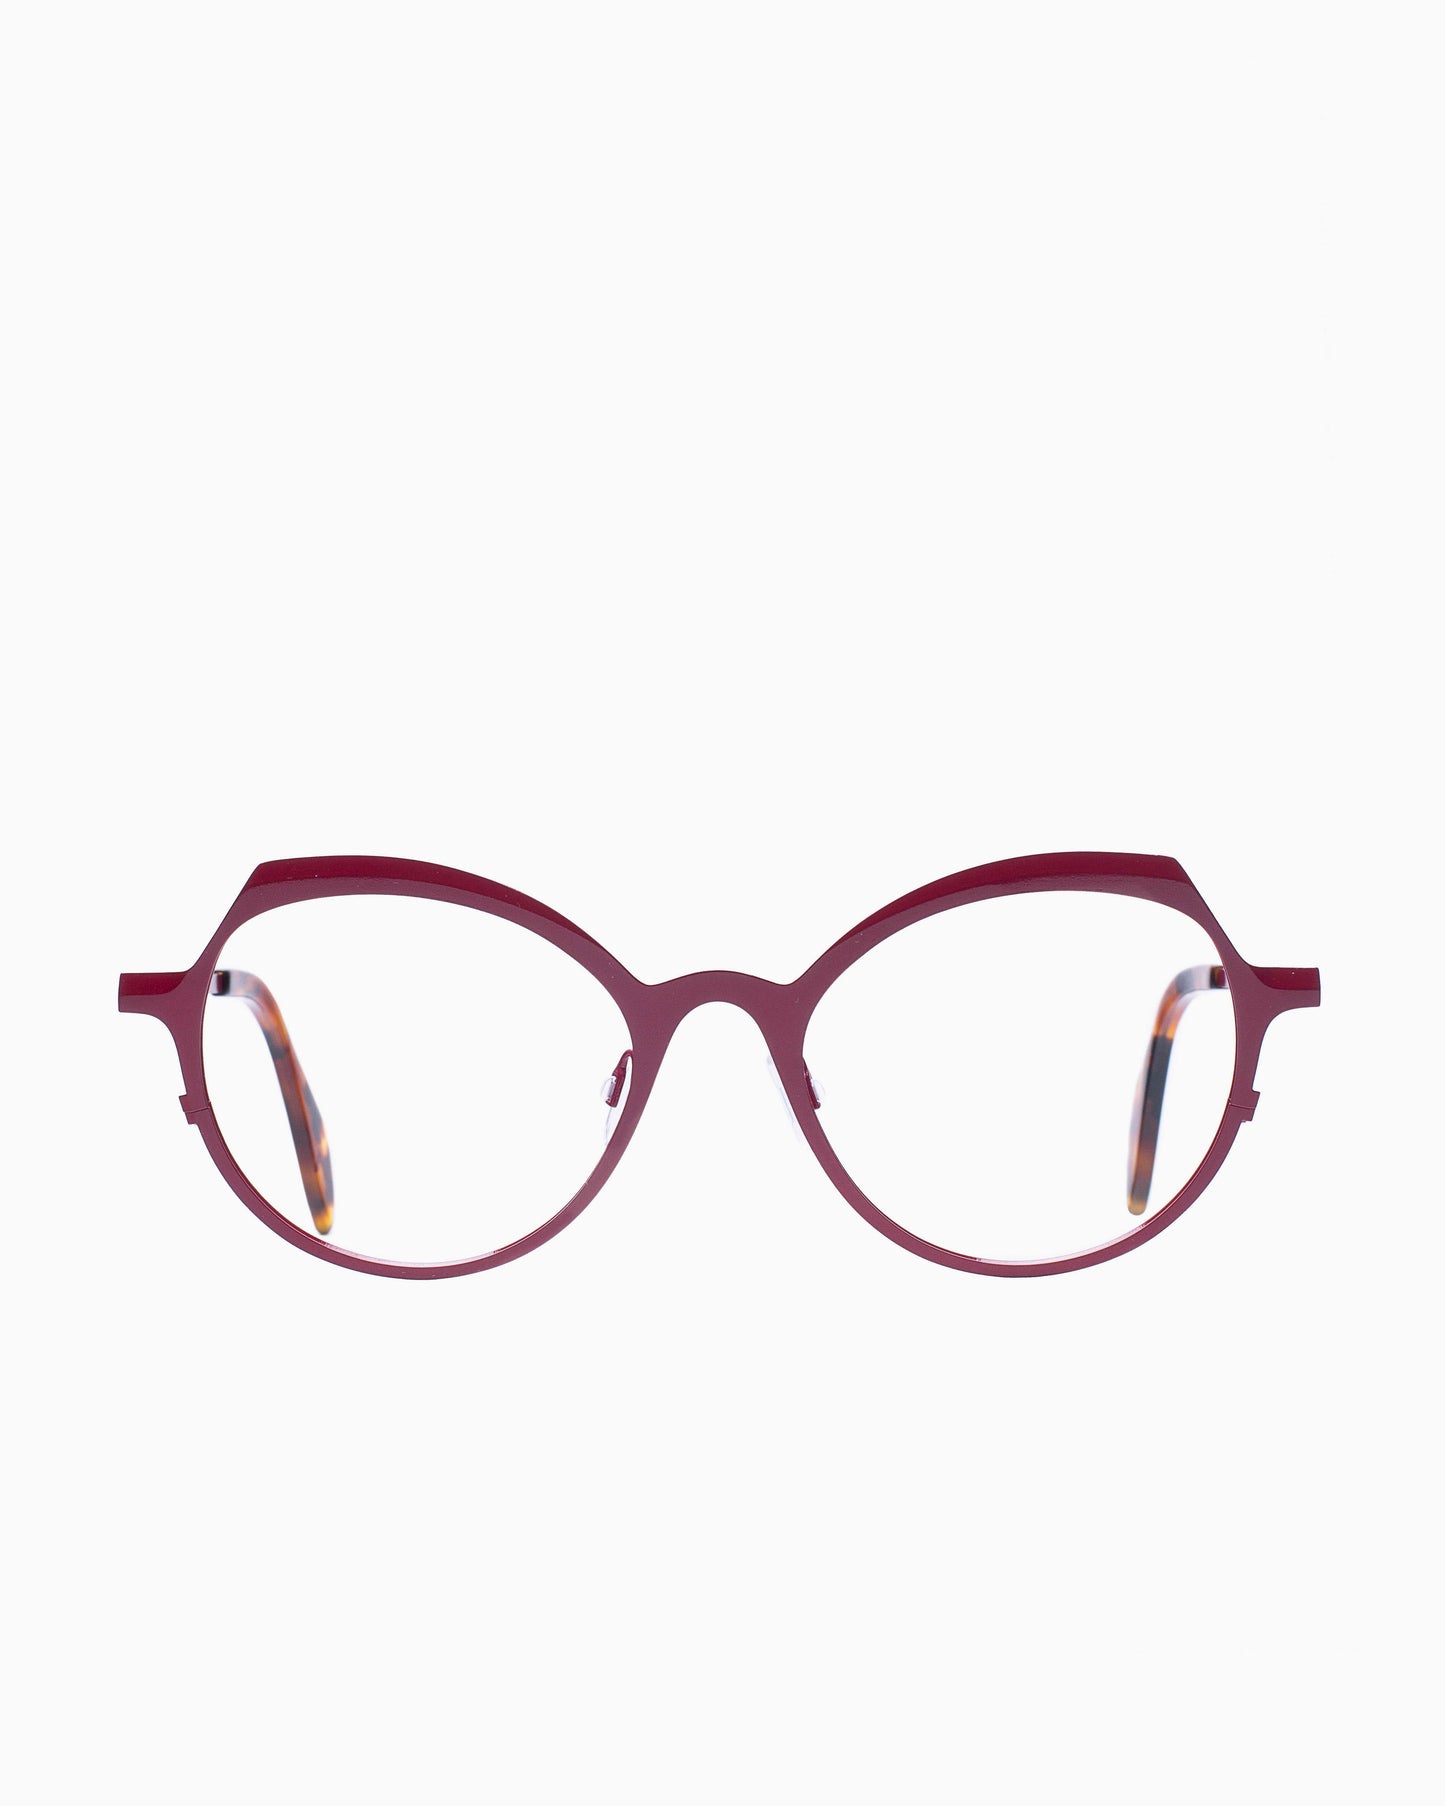 Theo - Pendant - 191 | glasses bar